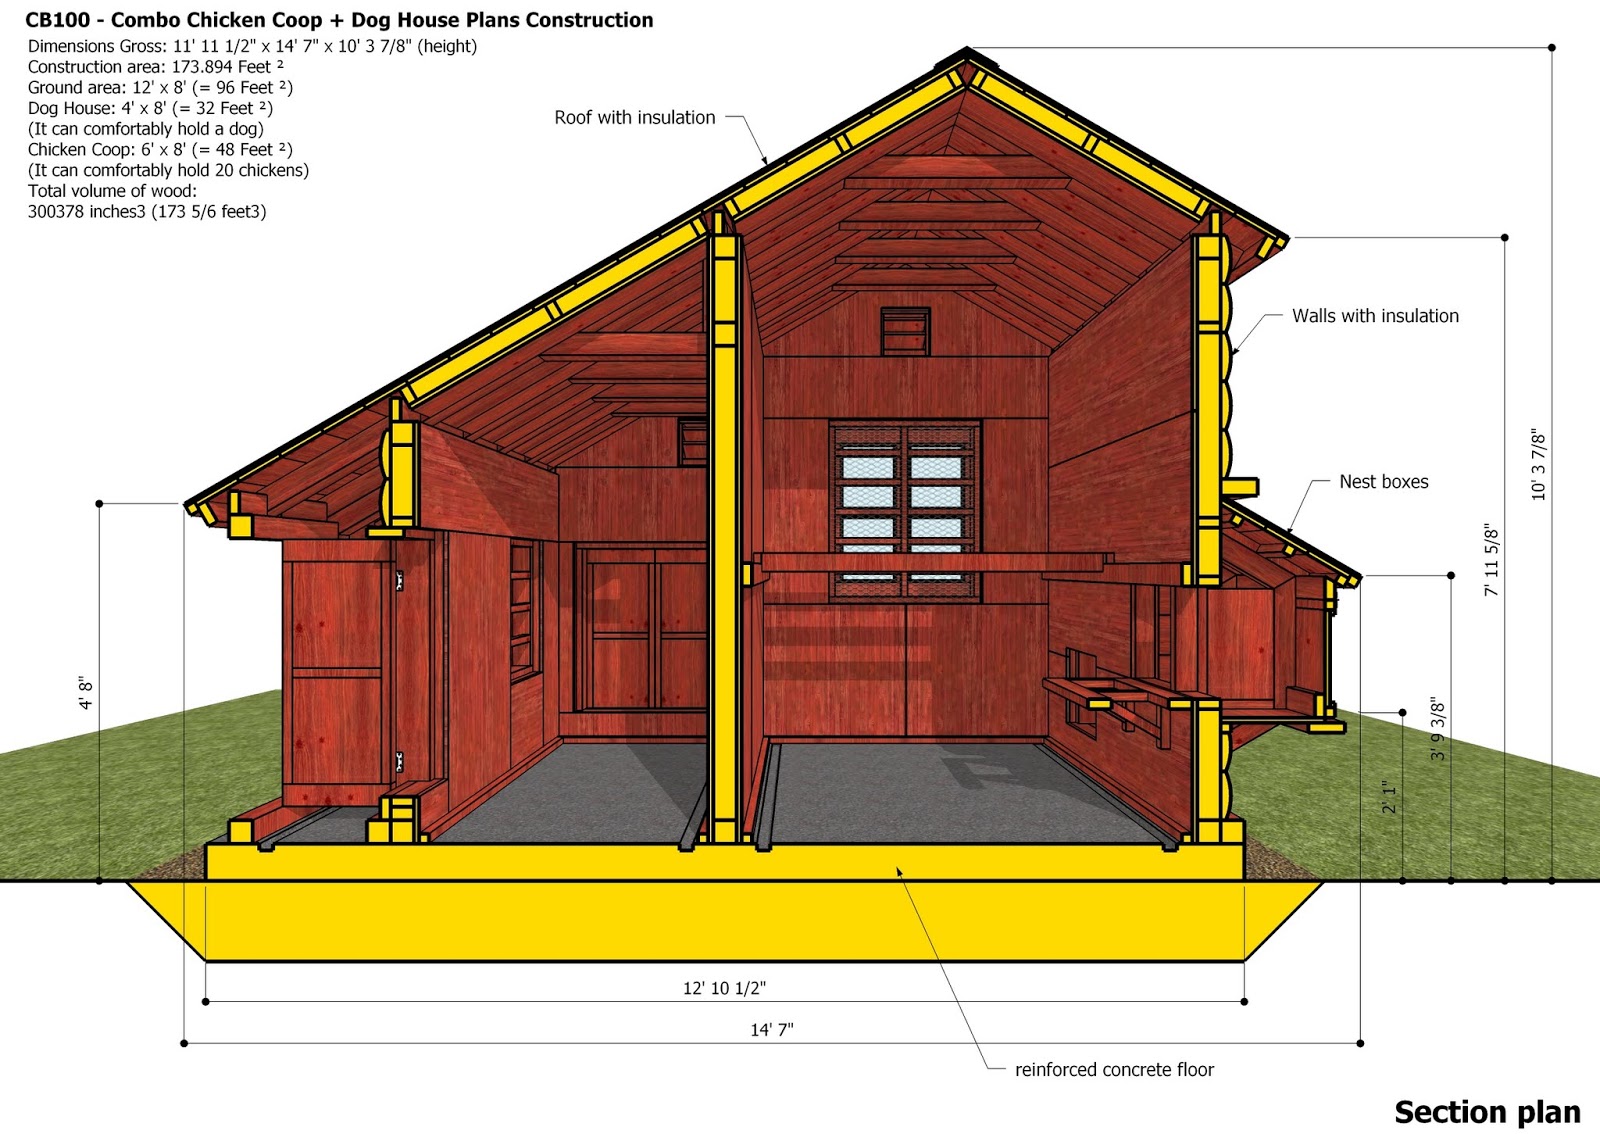 home garden plans: CB100 - Combo Plans - Chicken Coop 